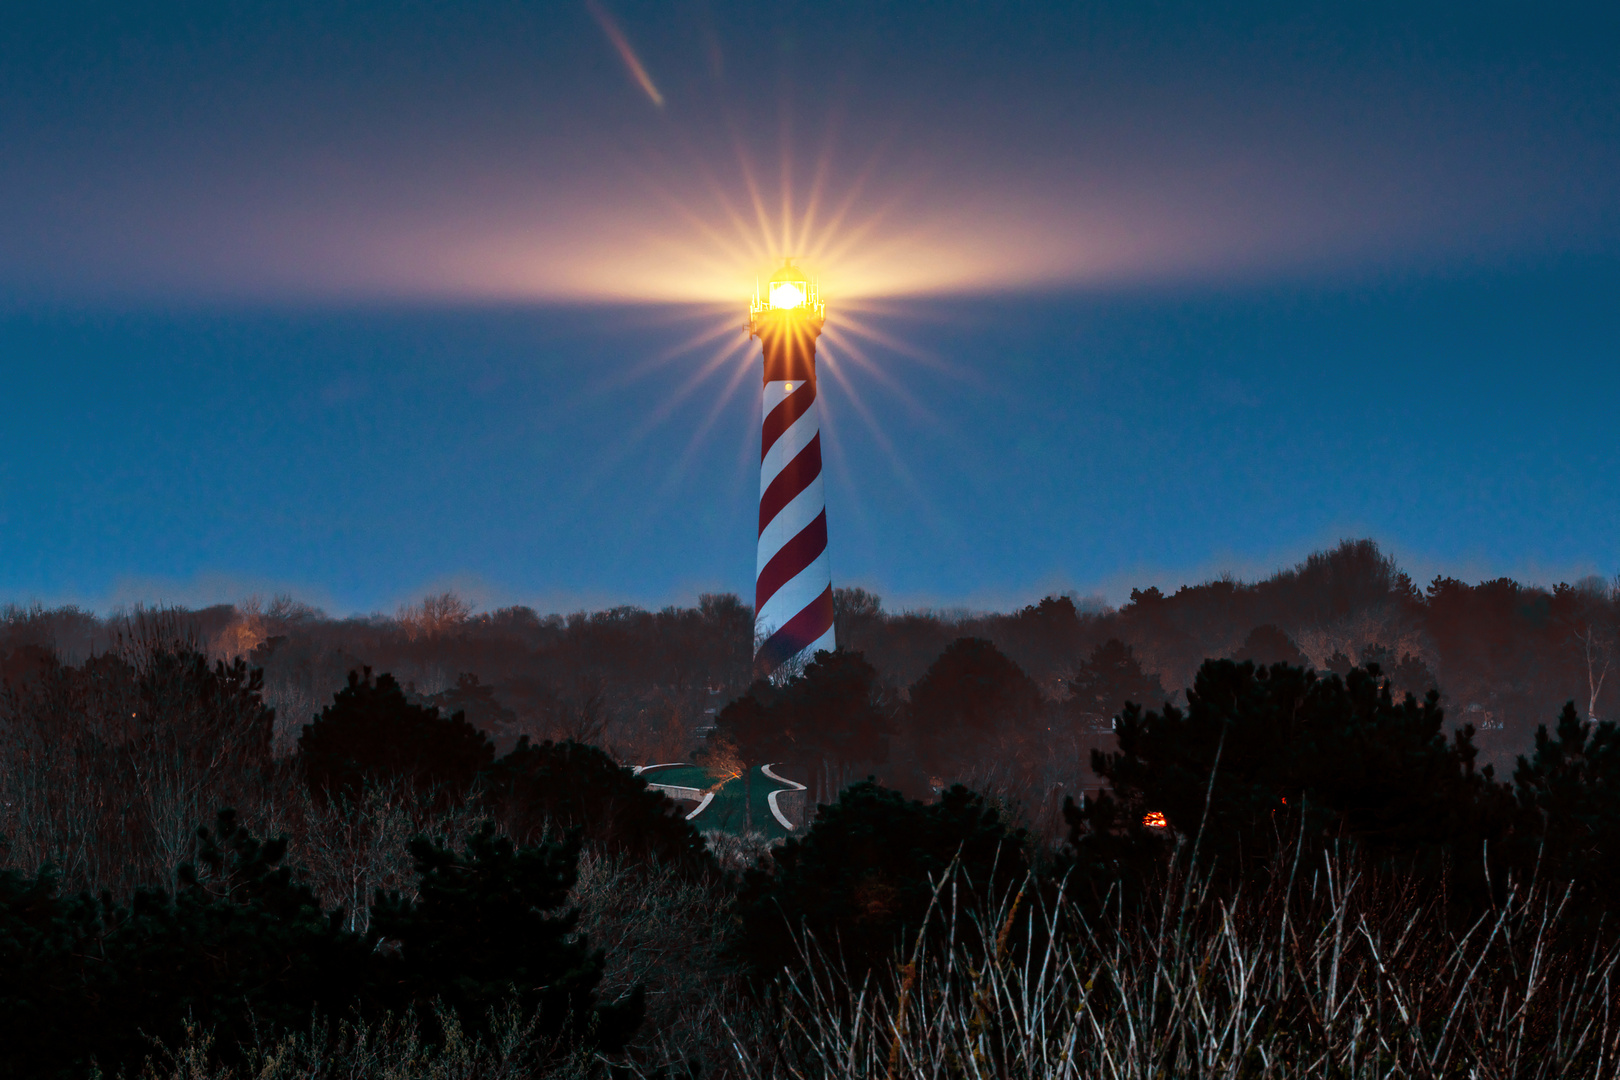 Leuchtturm in Niuew Haamstede in Zeeland